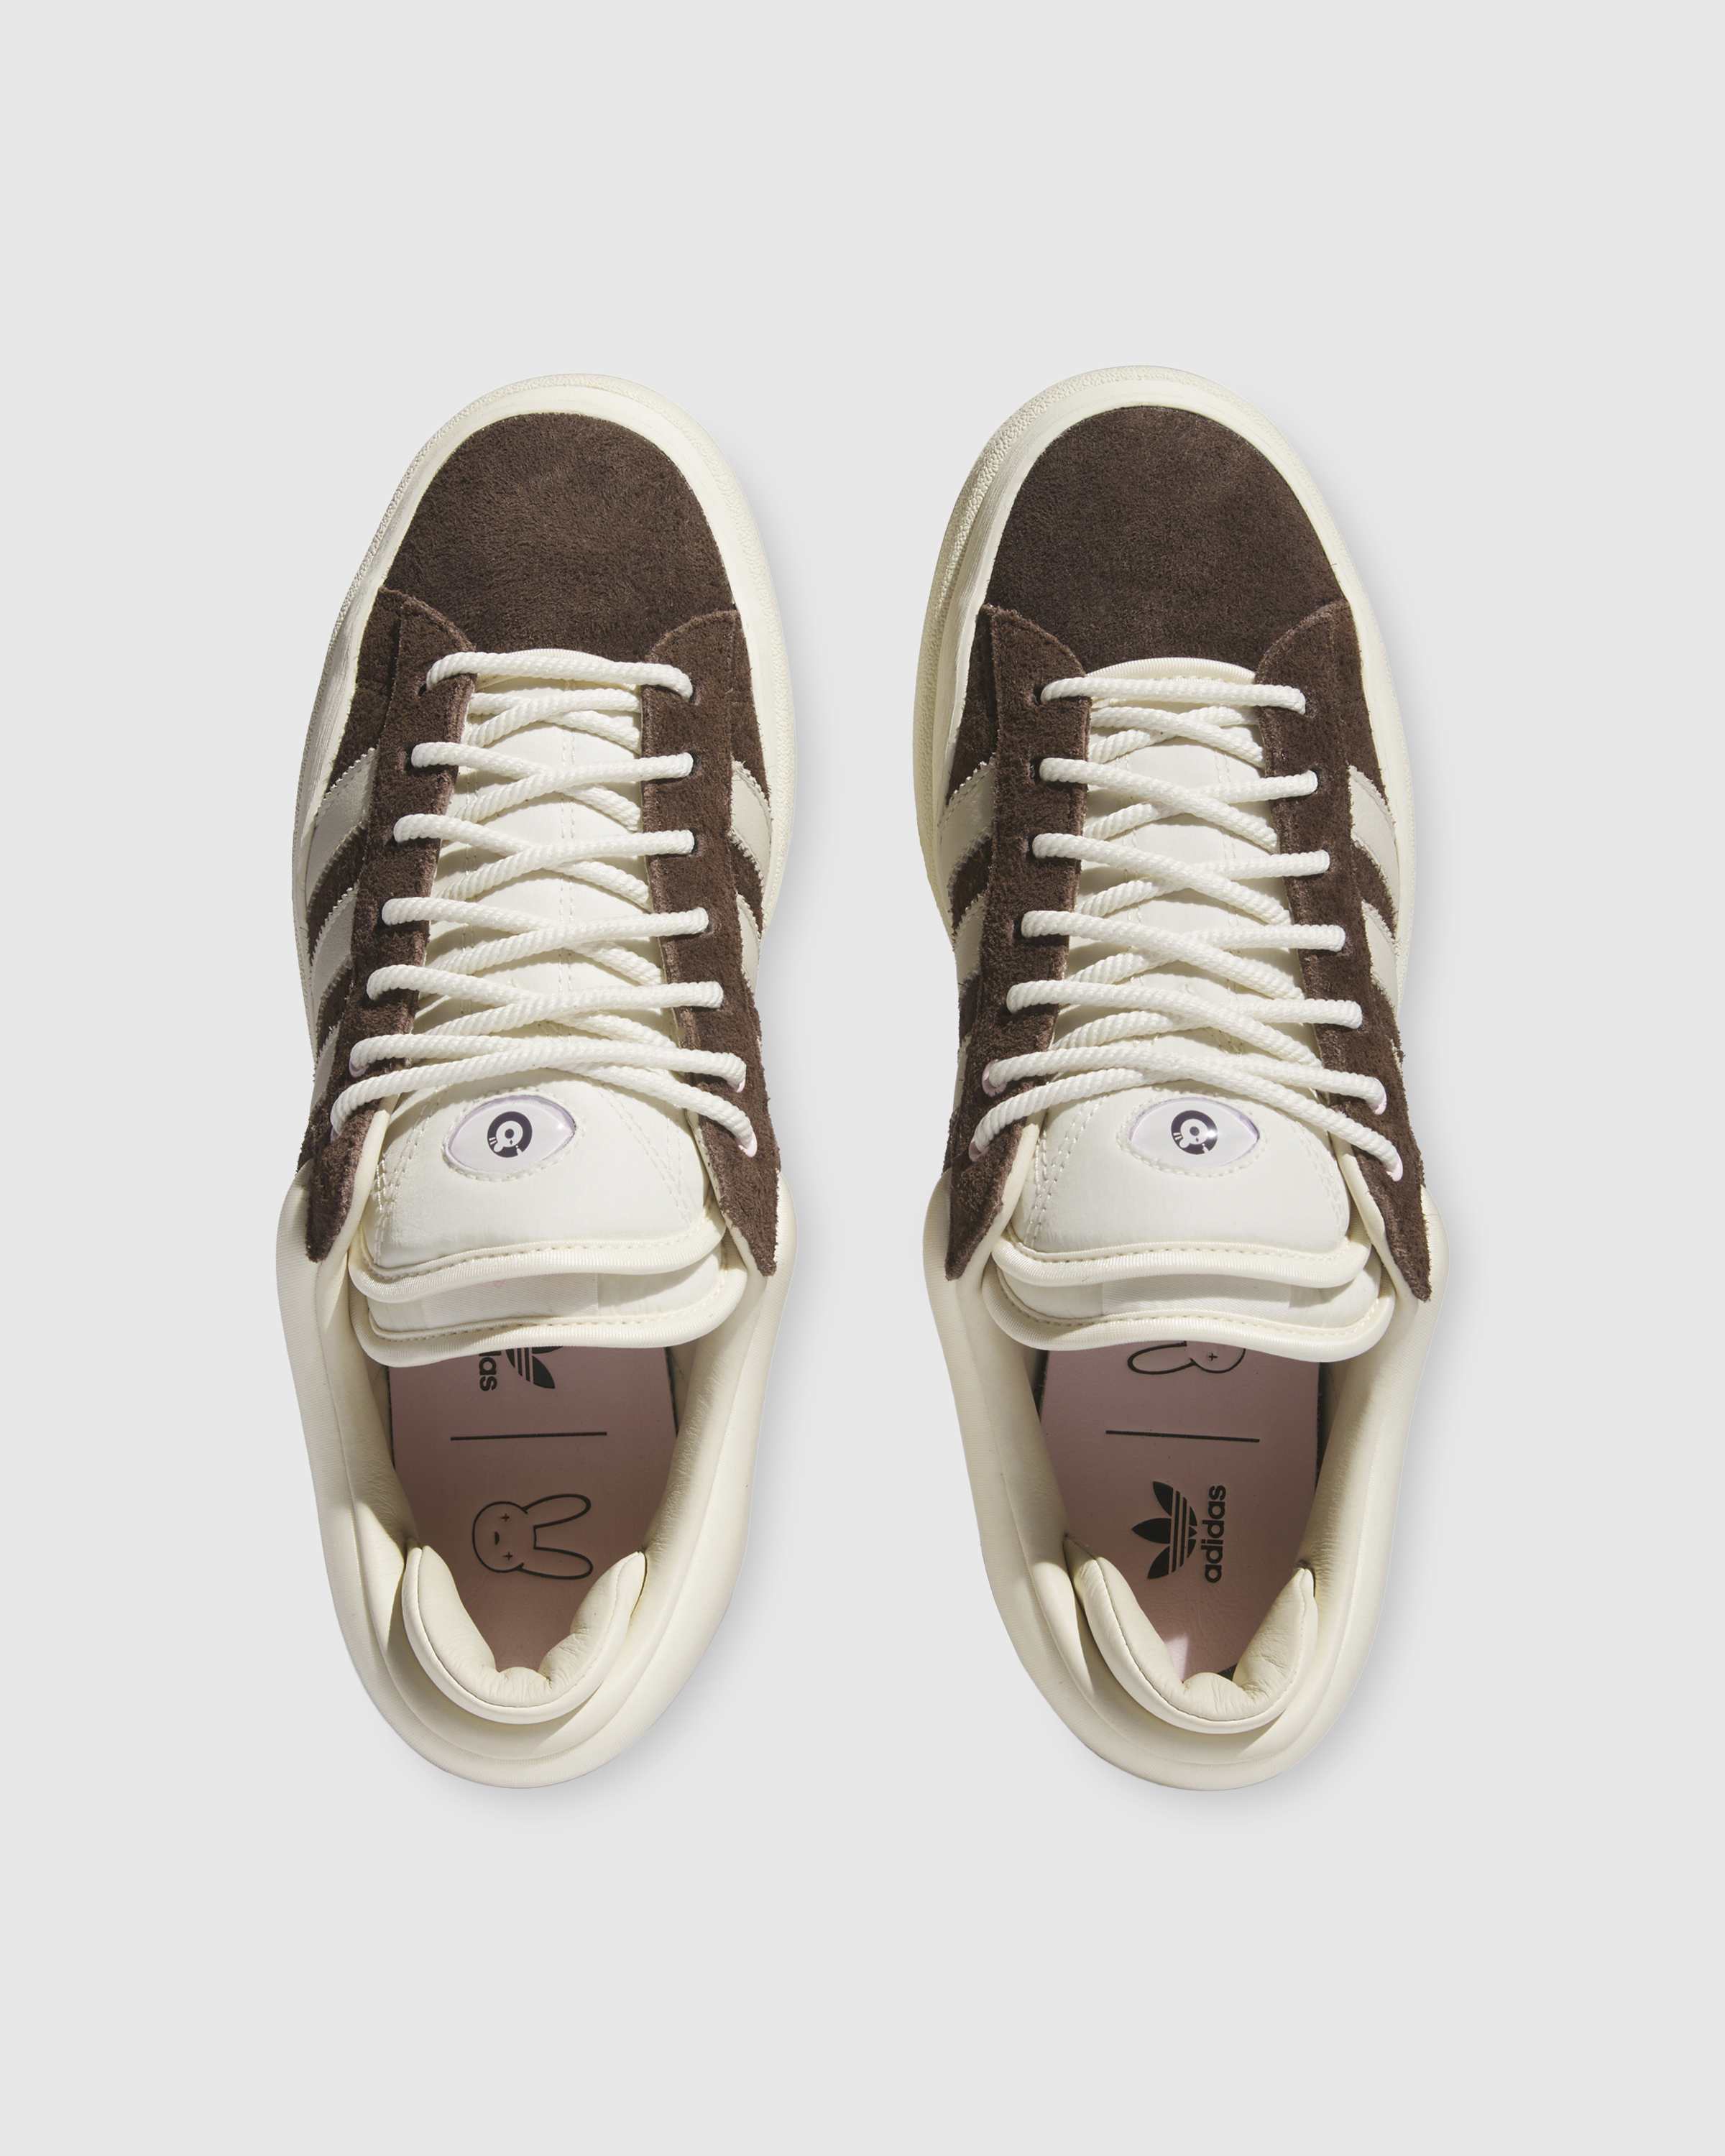 Adidas – Bad Bunny Campus Dark Brown - Sneakers - Brown - Image 5